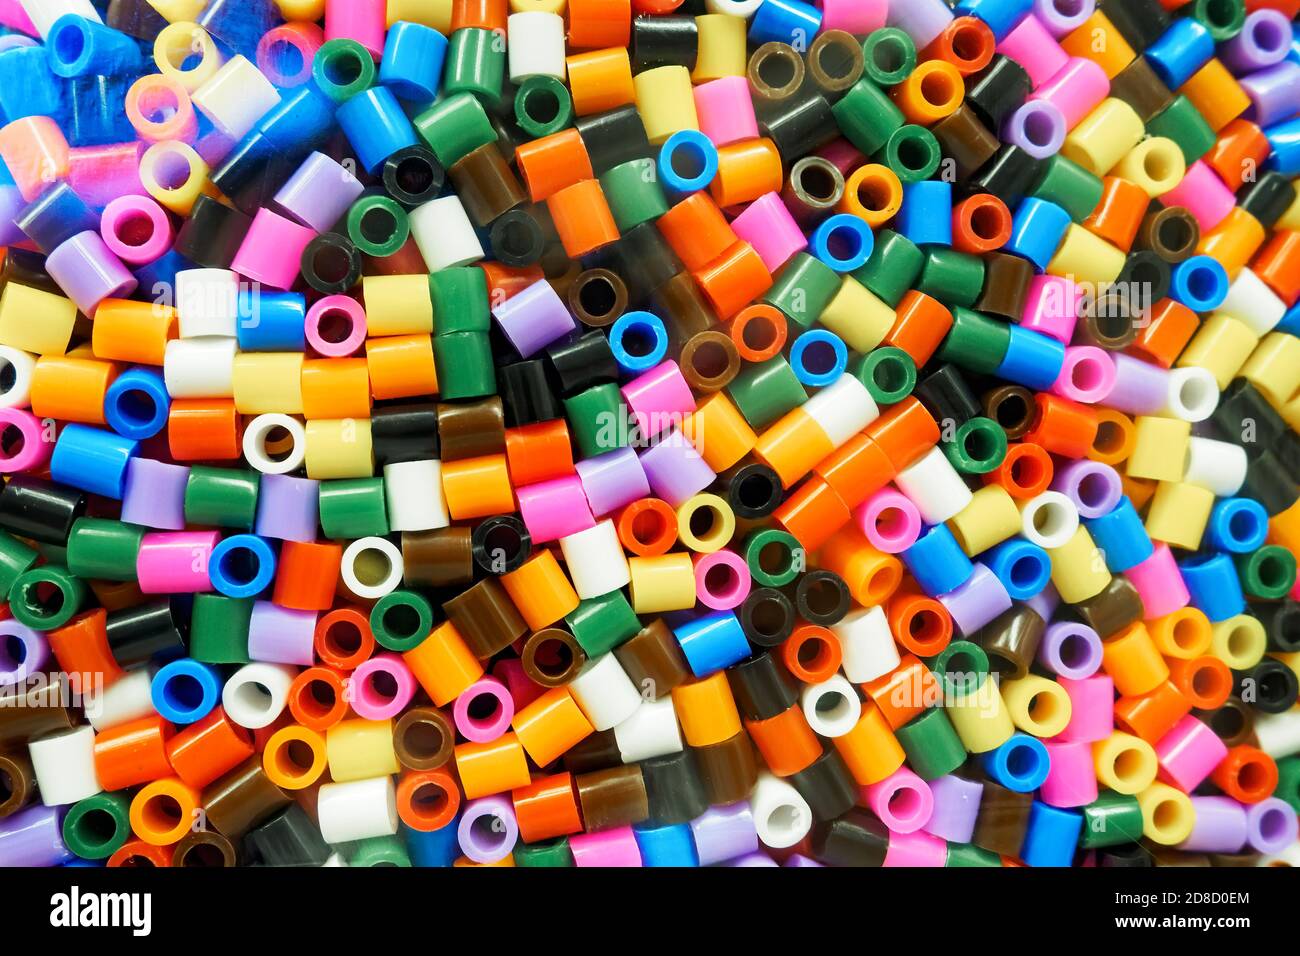 Verschiedene Farben von Ikea Pyssla Thermo Mosaik Perlen, selektiver Fokus  Stockfotografie - Alamy